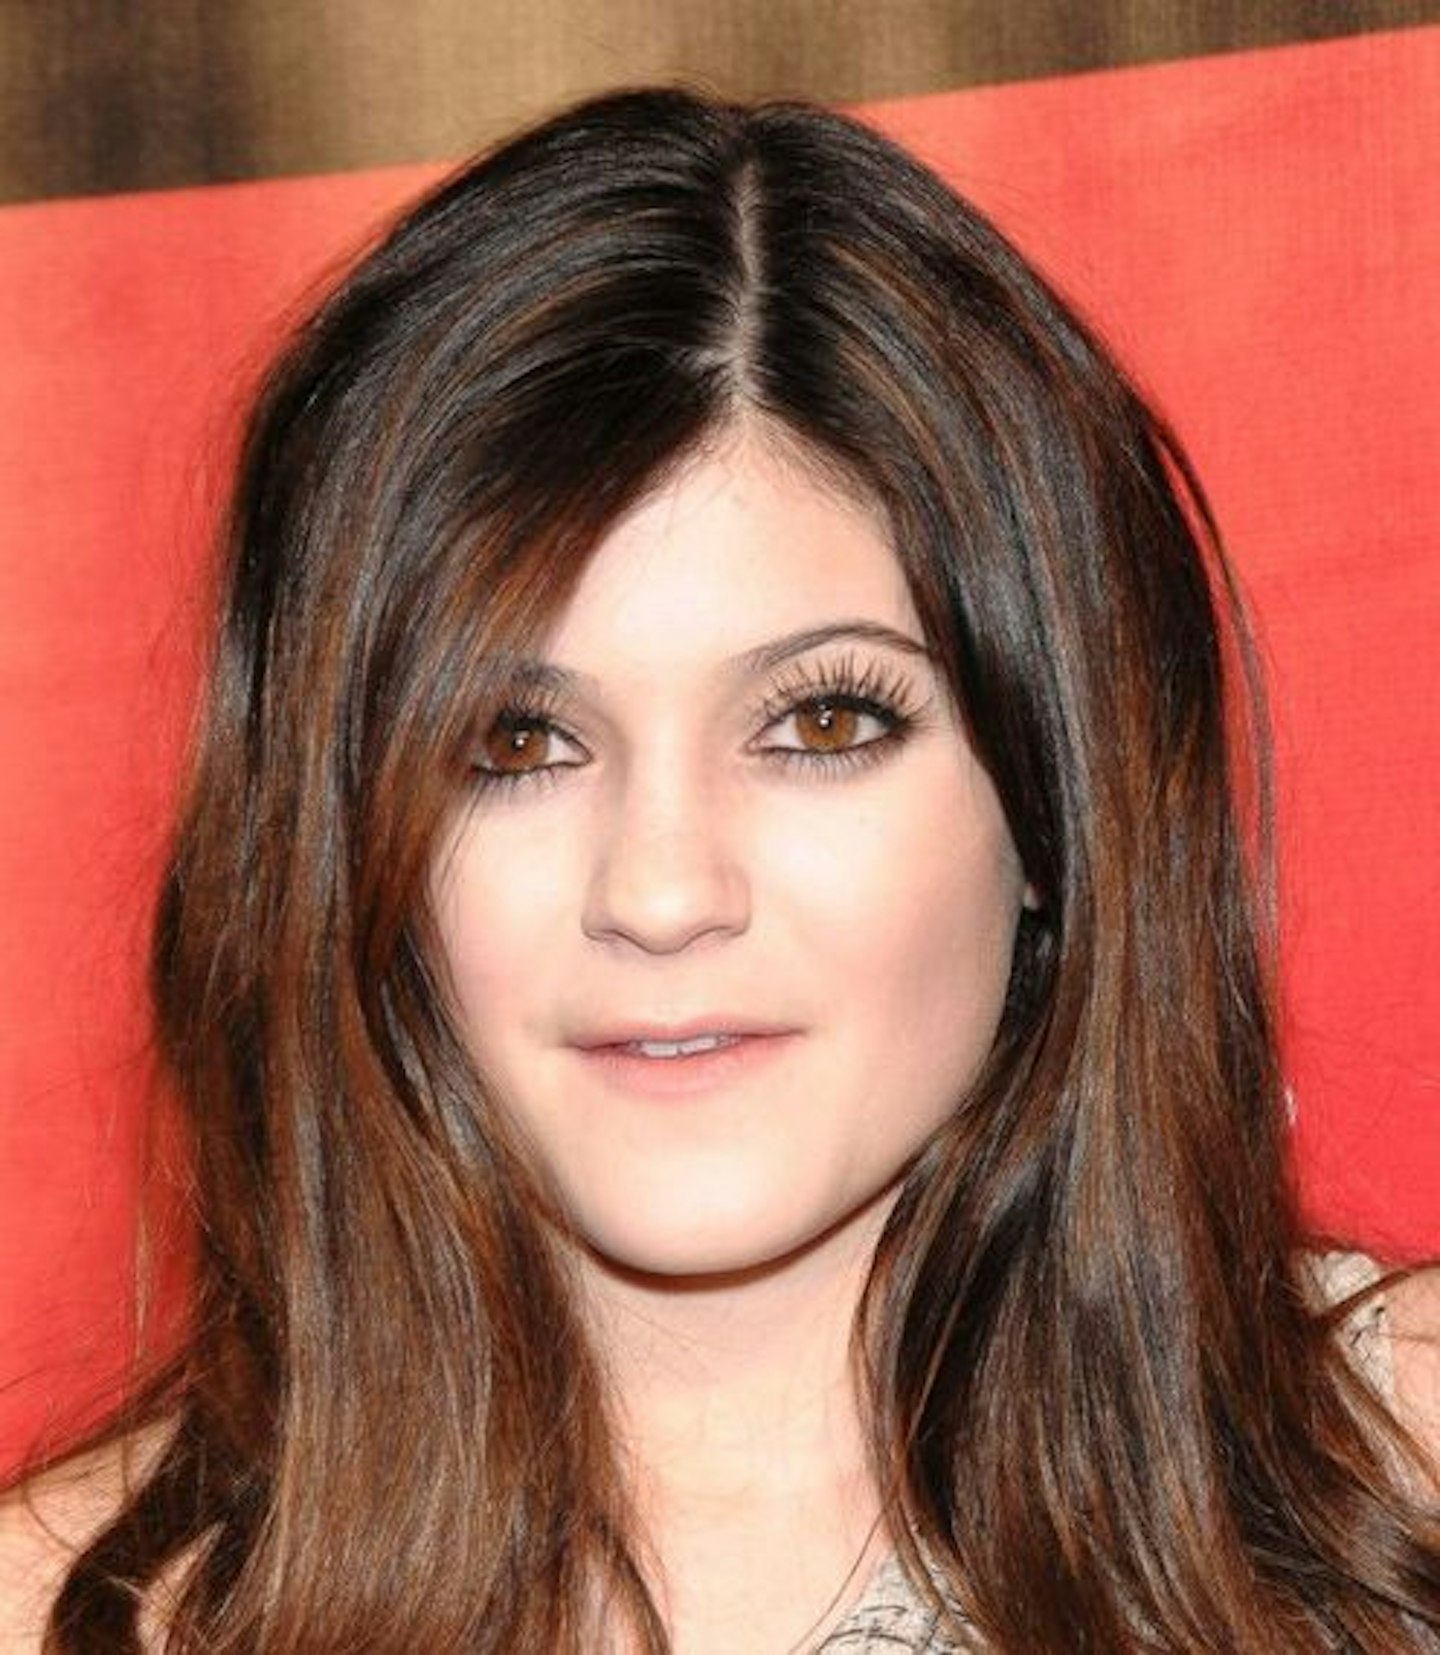 Kylie Jenner plastic surgery timeline - lip fillers, nose job, hair